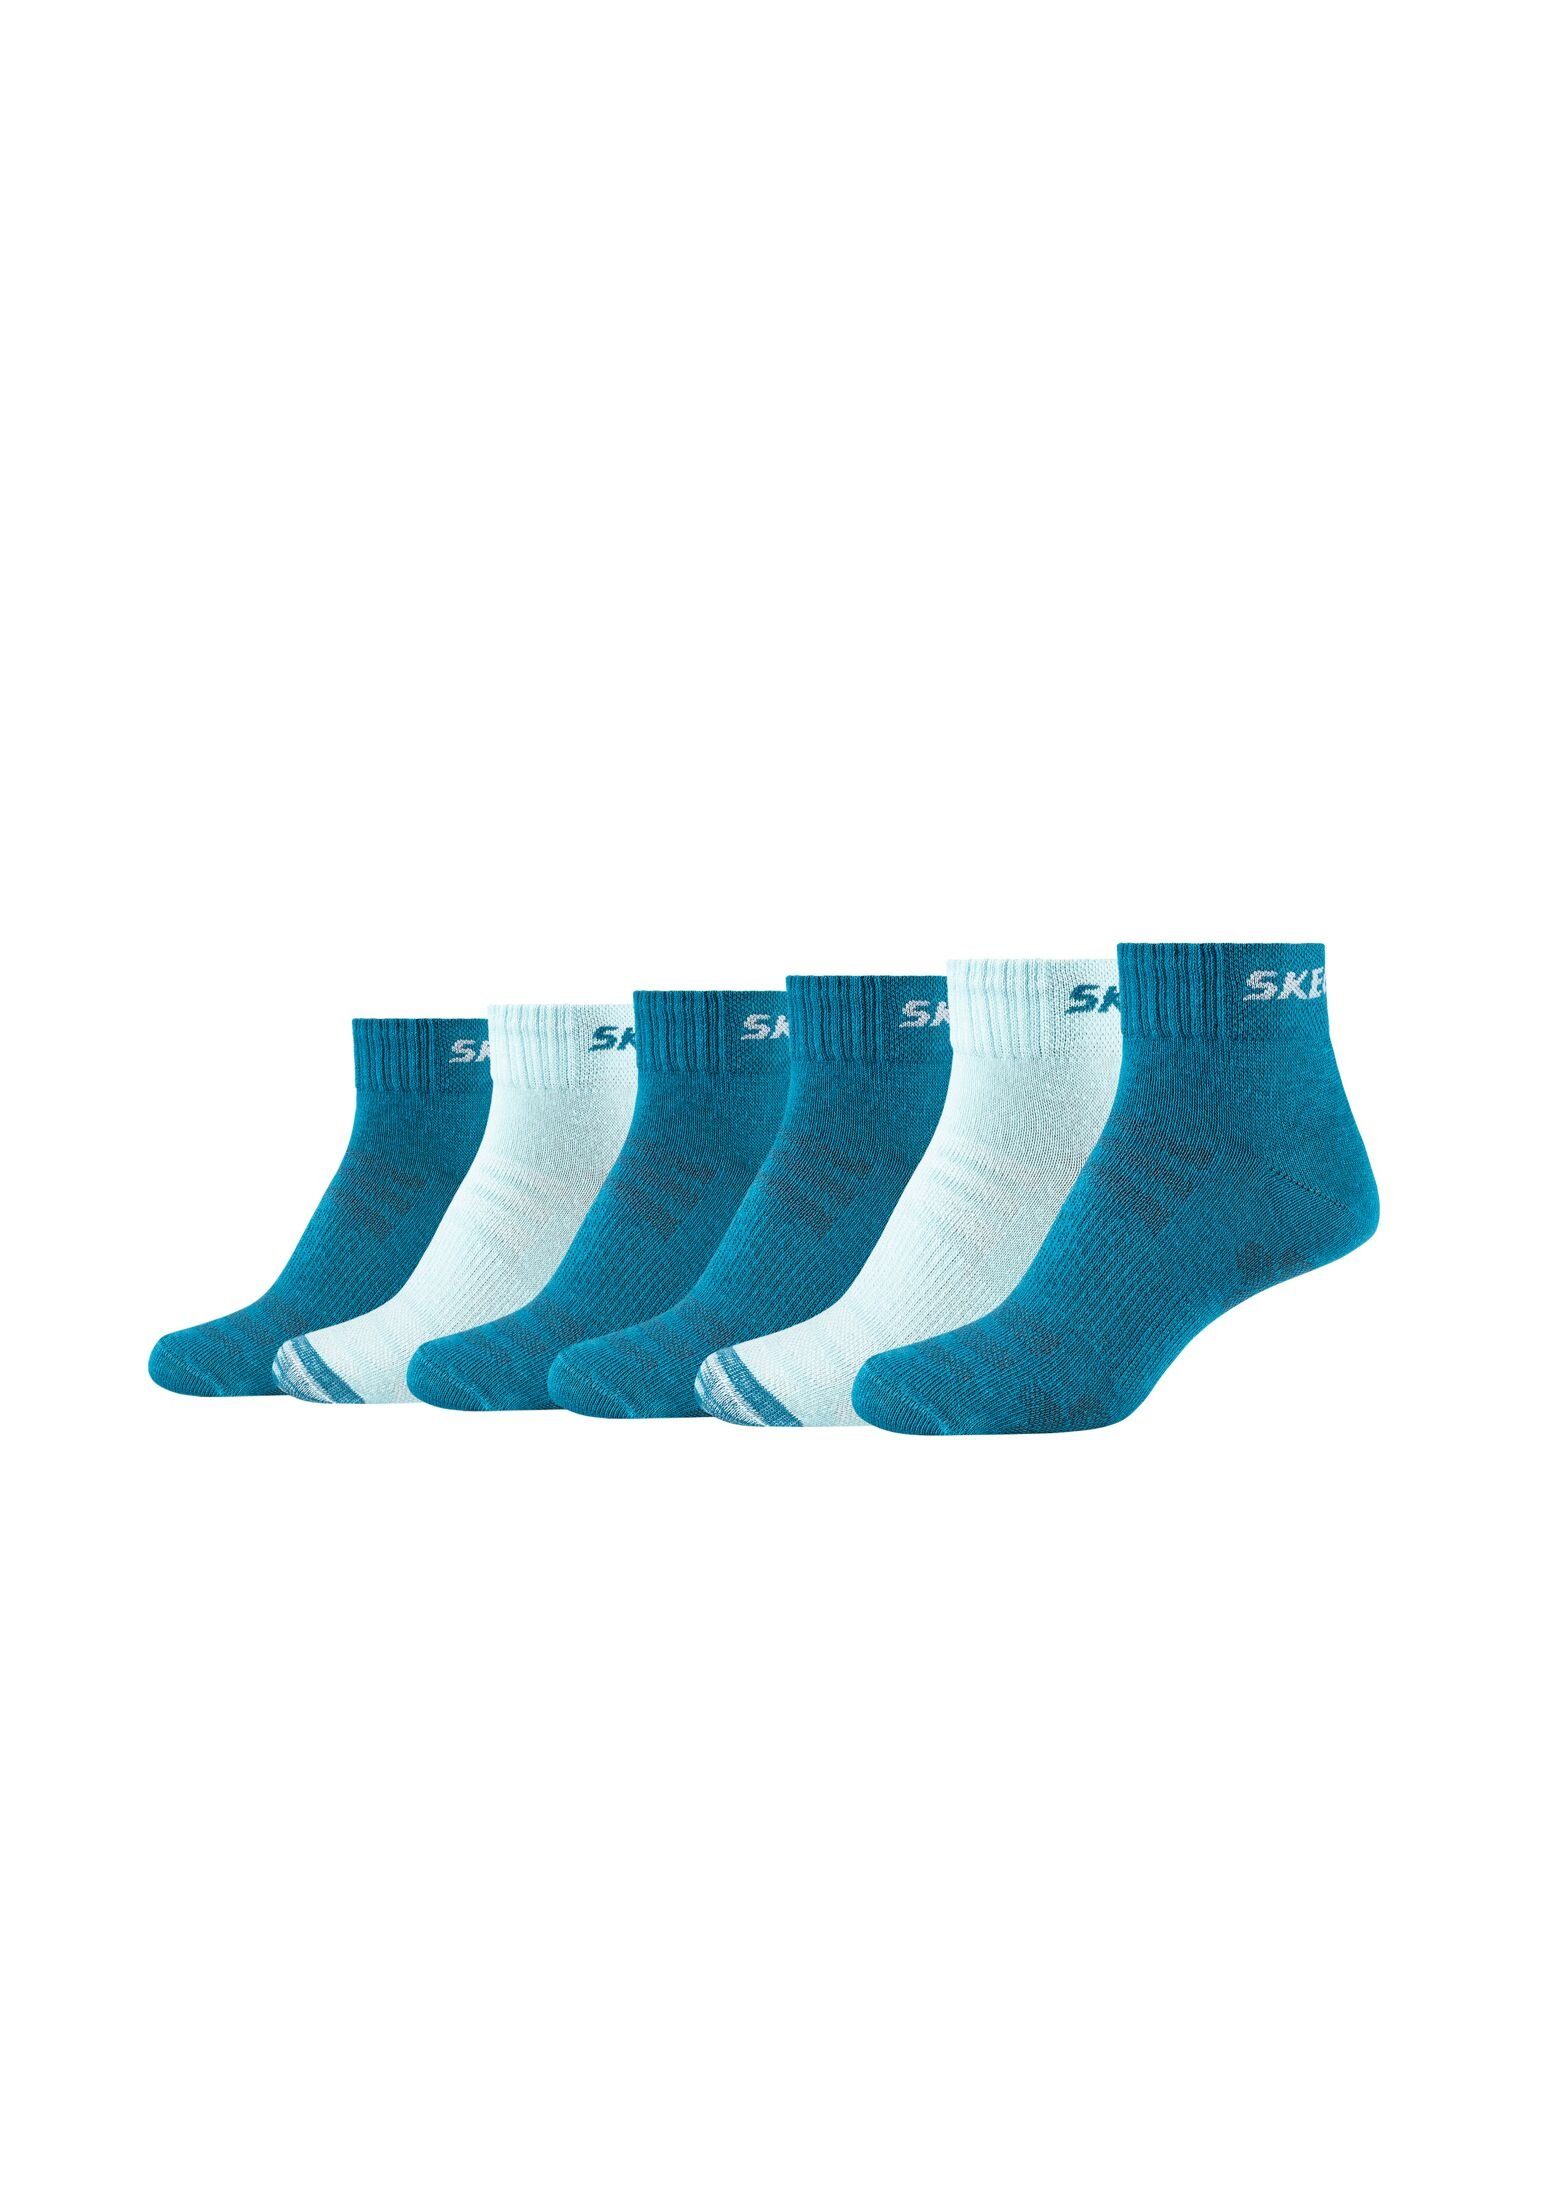 Skechers Kurzsocken Kurzsocken 6er Pack, Komfort-Bündchen praktischen 6er-Pack mit Socken im